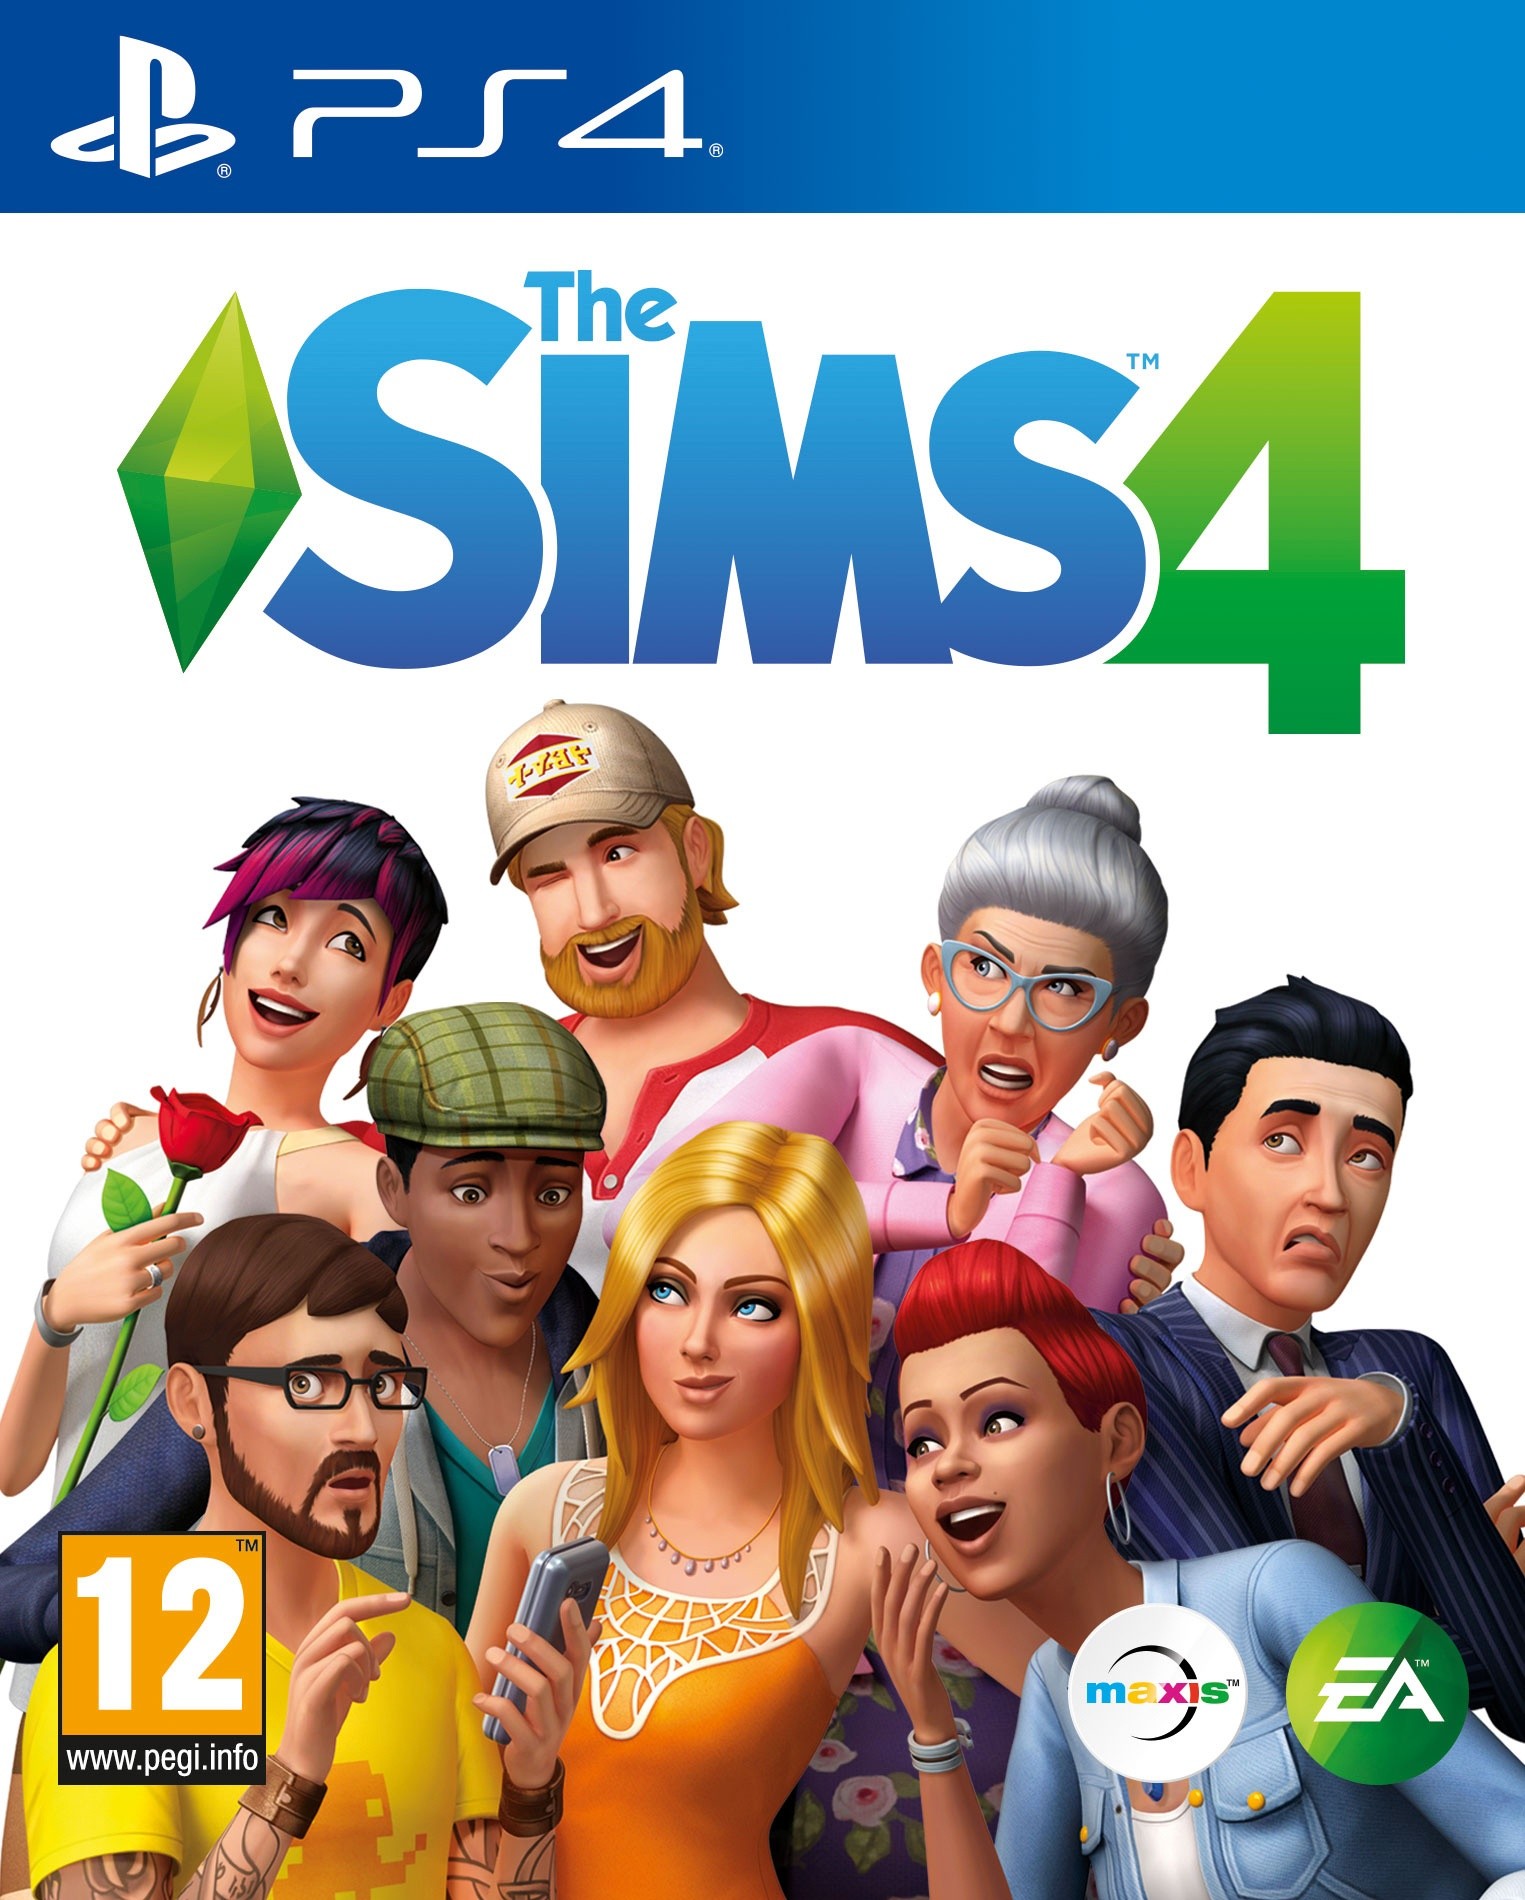 The Sims 4 [PS4] 5.05 / 6.72 / 7.02 / 7.55 [EUR] (2017) [Русский] (v1.24/v1.05)